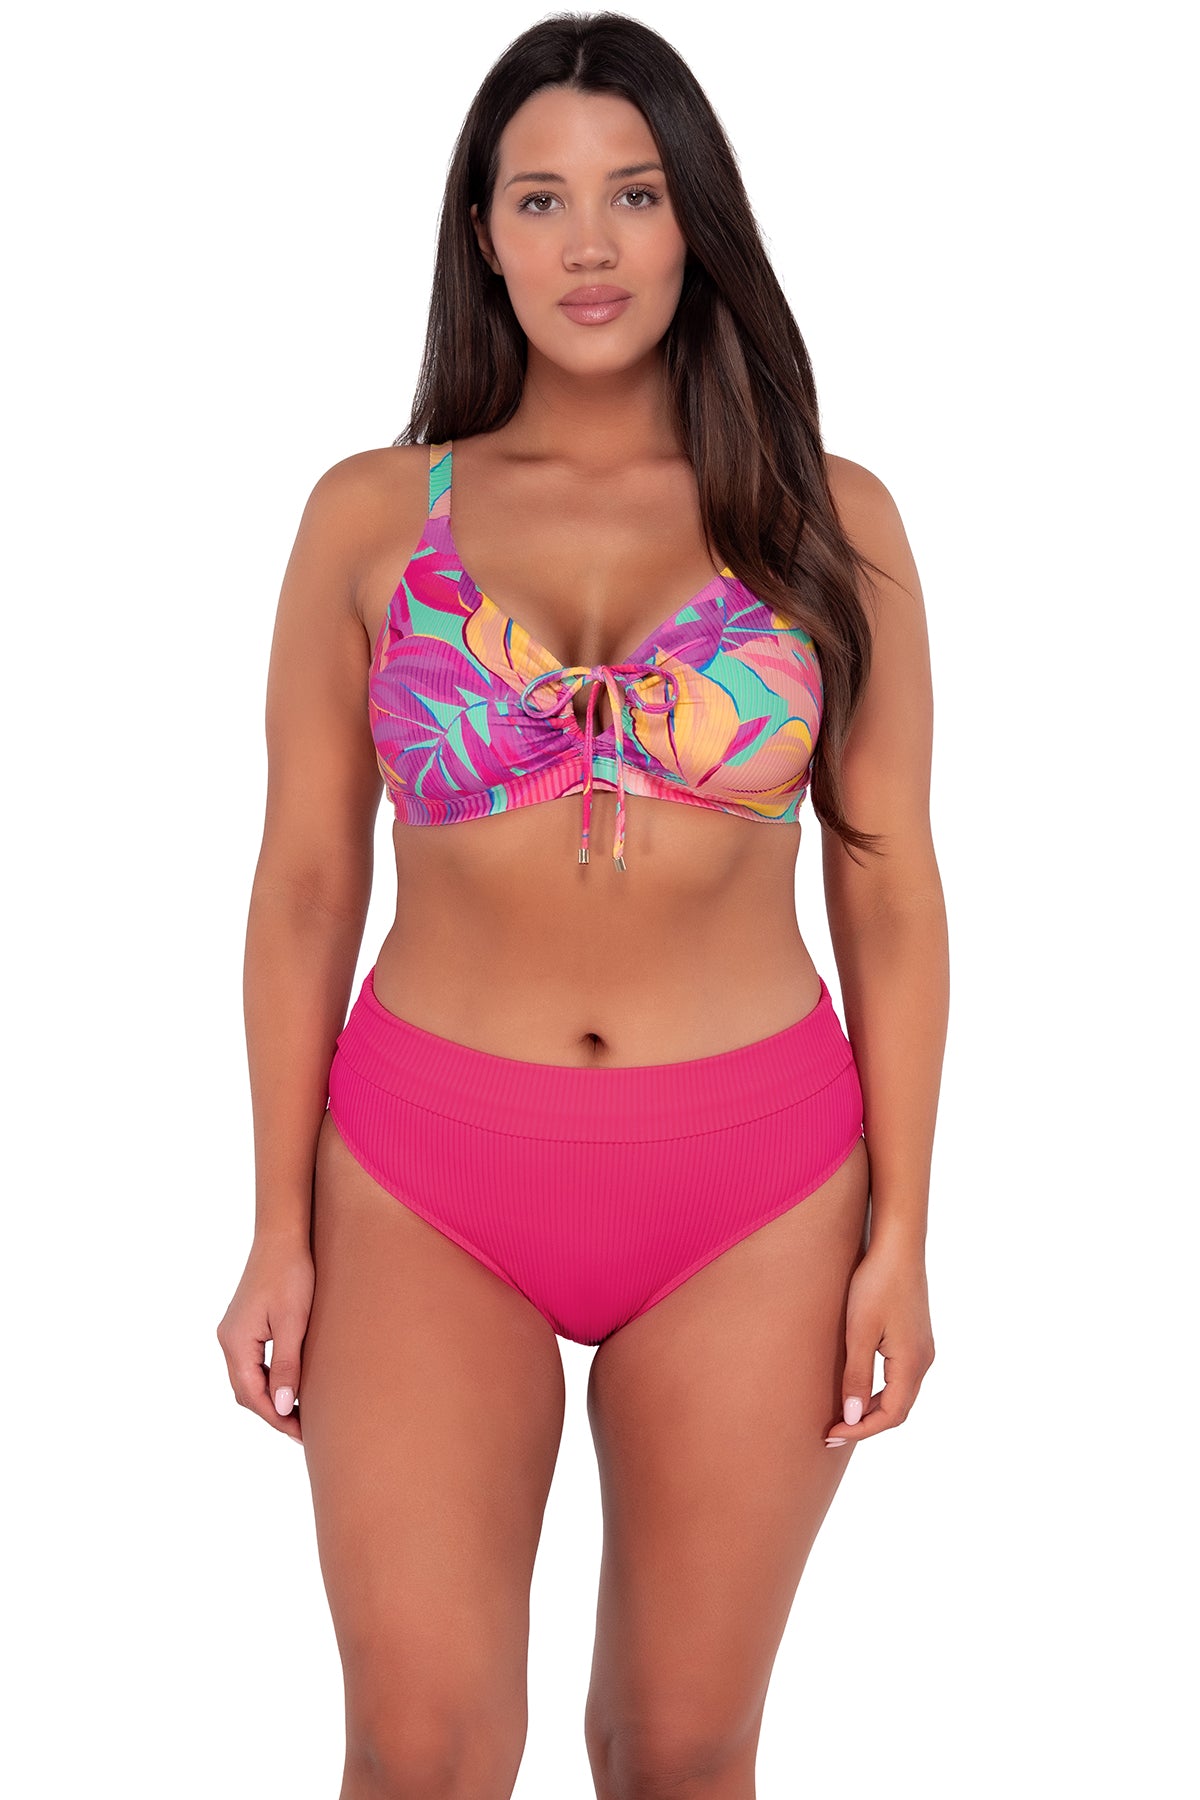 Front pose #1 of Nicki wearing Sunsets Oasis Sandbar Rib Kauai Keyhole Top paired with Hannah High Waist bikini bottom showing folded waist